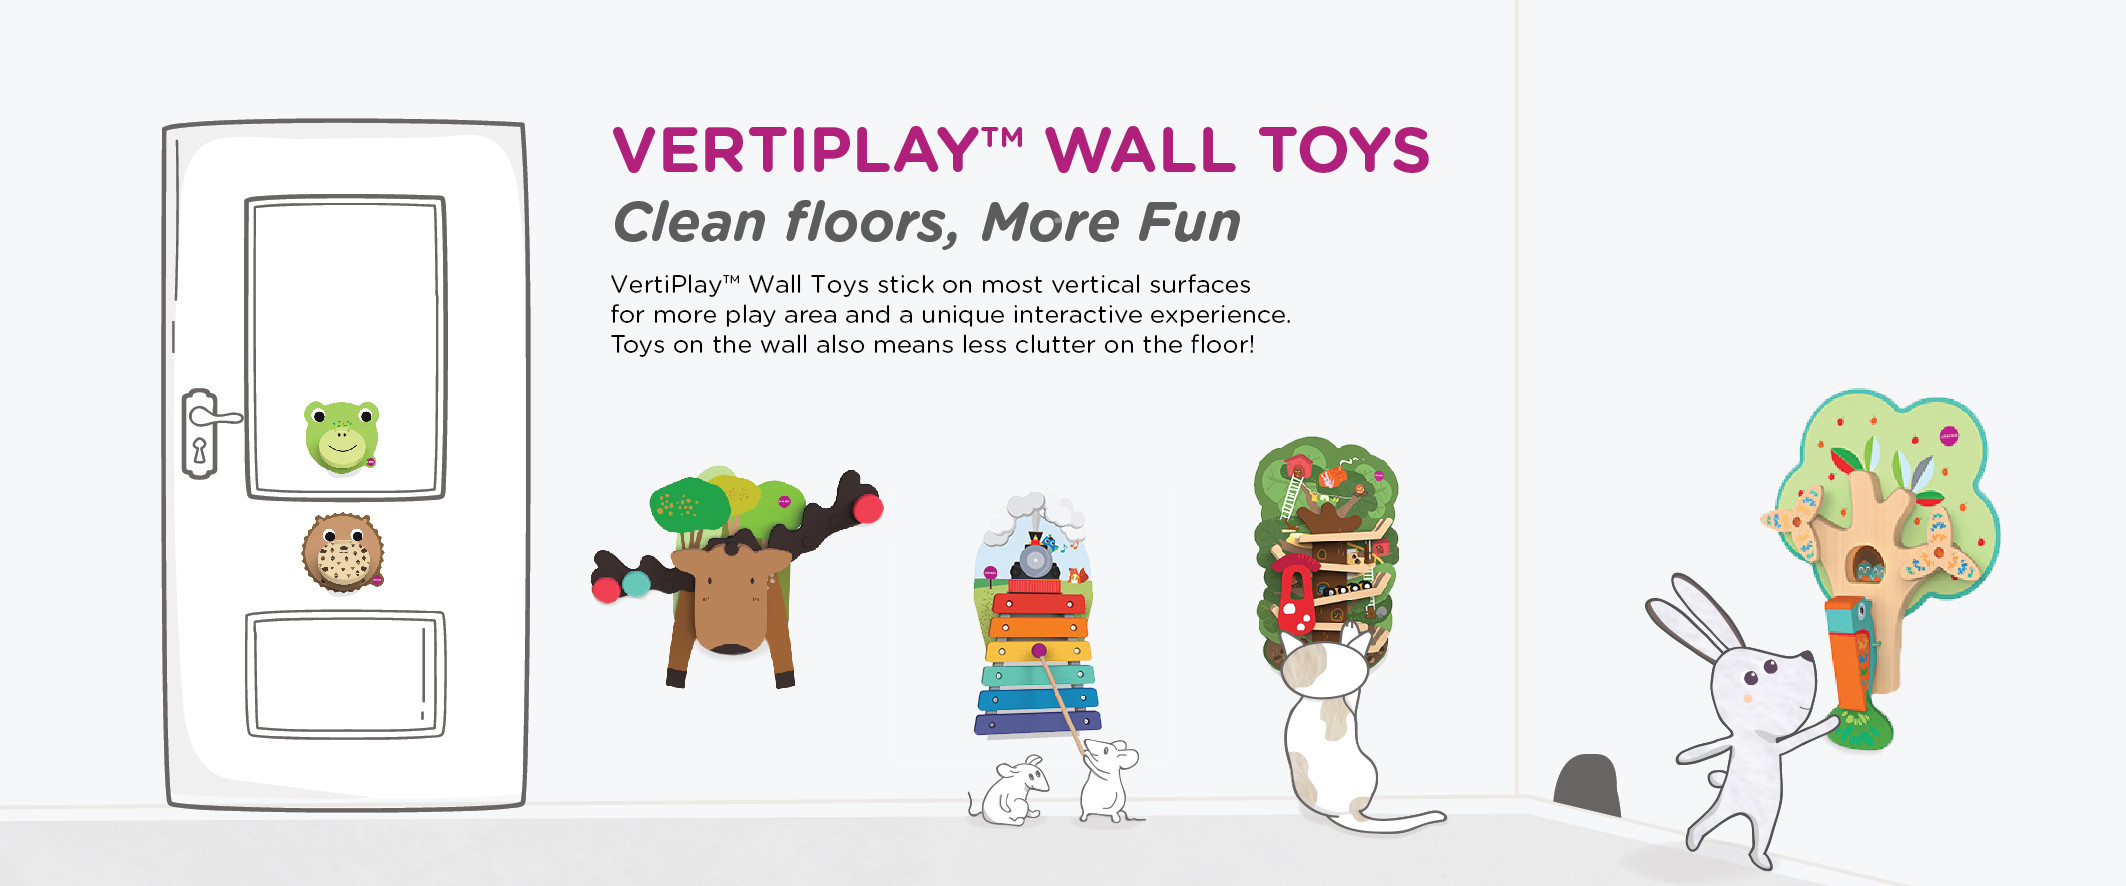 vertiplay wall toys